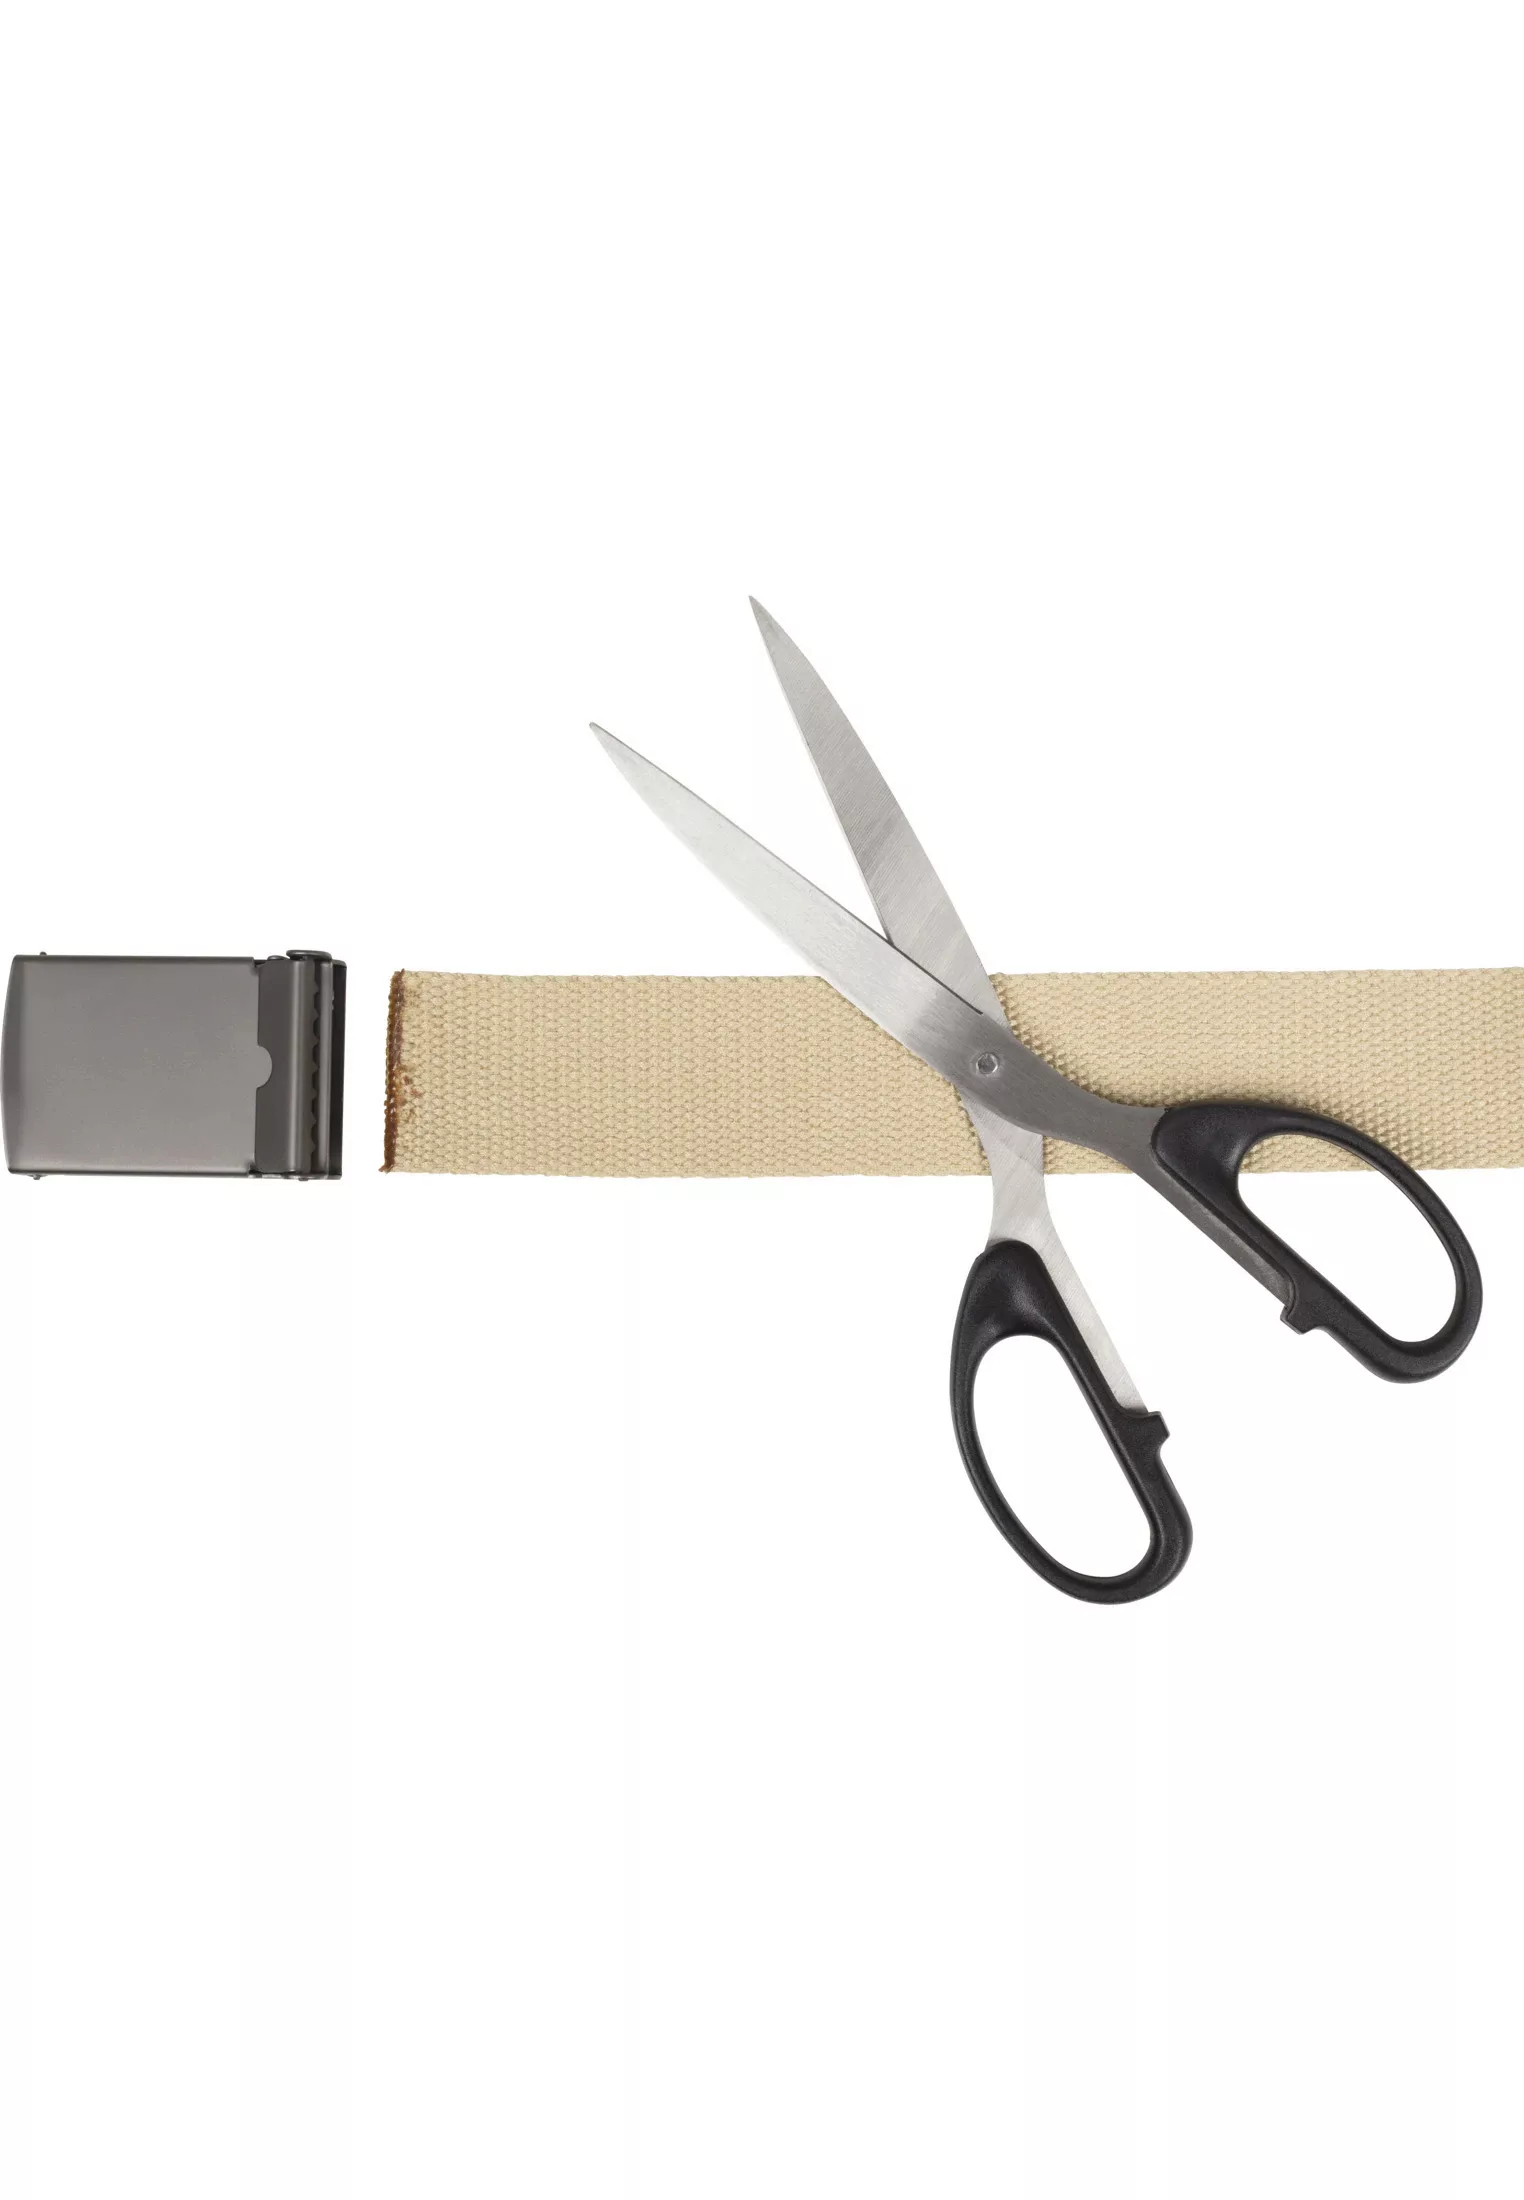 URBAN CLASSICS Hüftgürtel "Accessoires Canvas Belts" günstig online kaufen